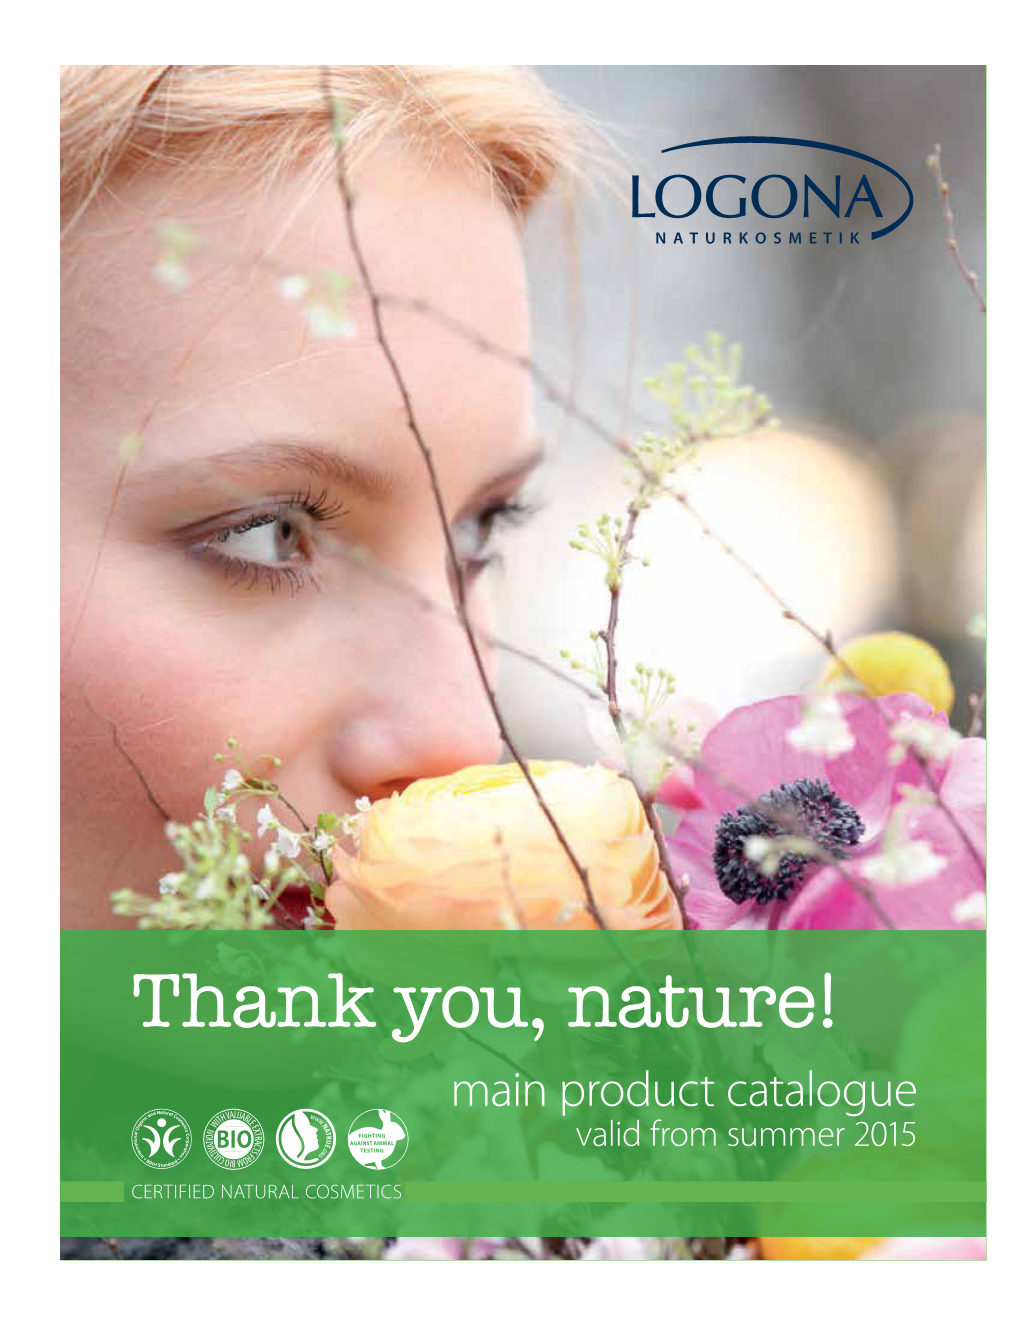 Logona Complete Catalog 2015